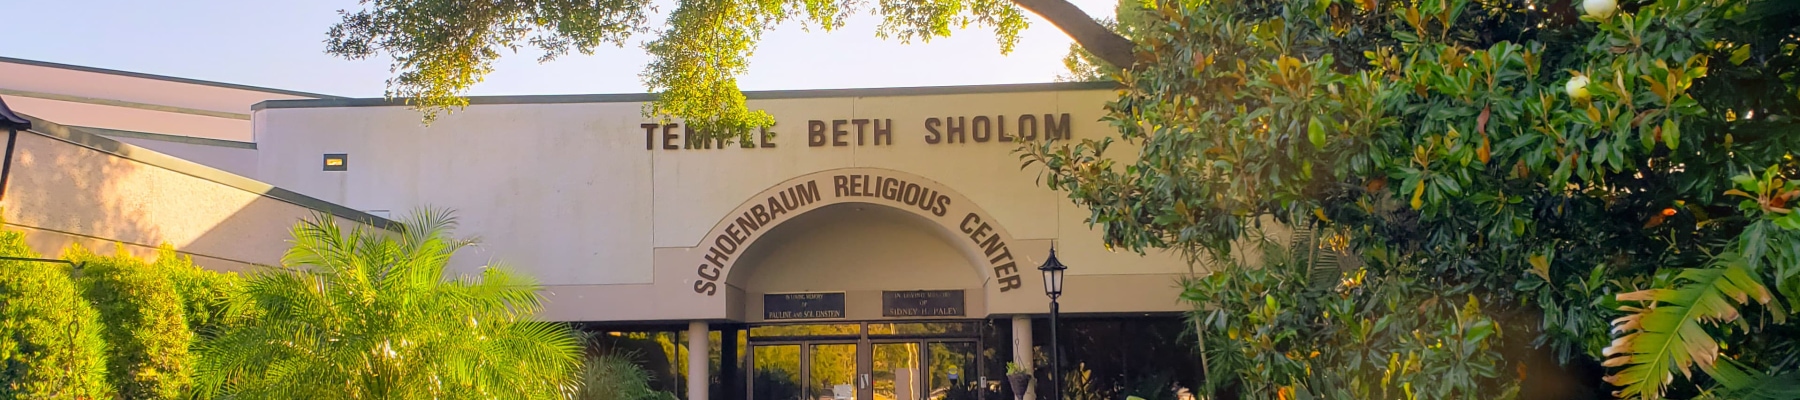 Temple Beth Sholom